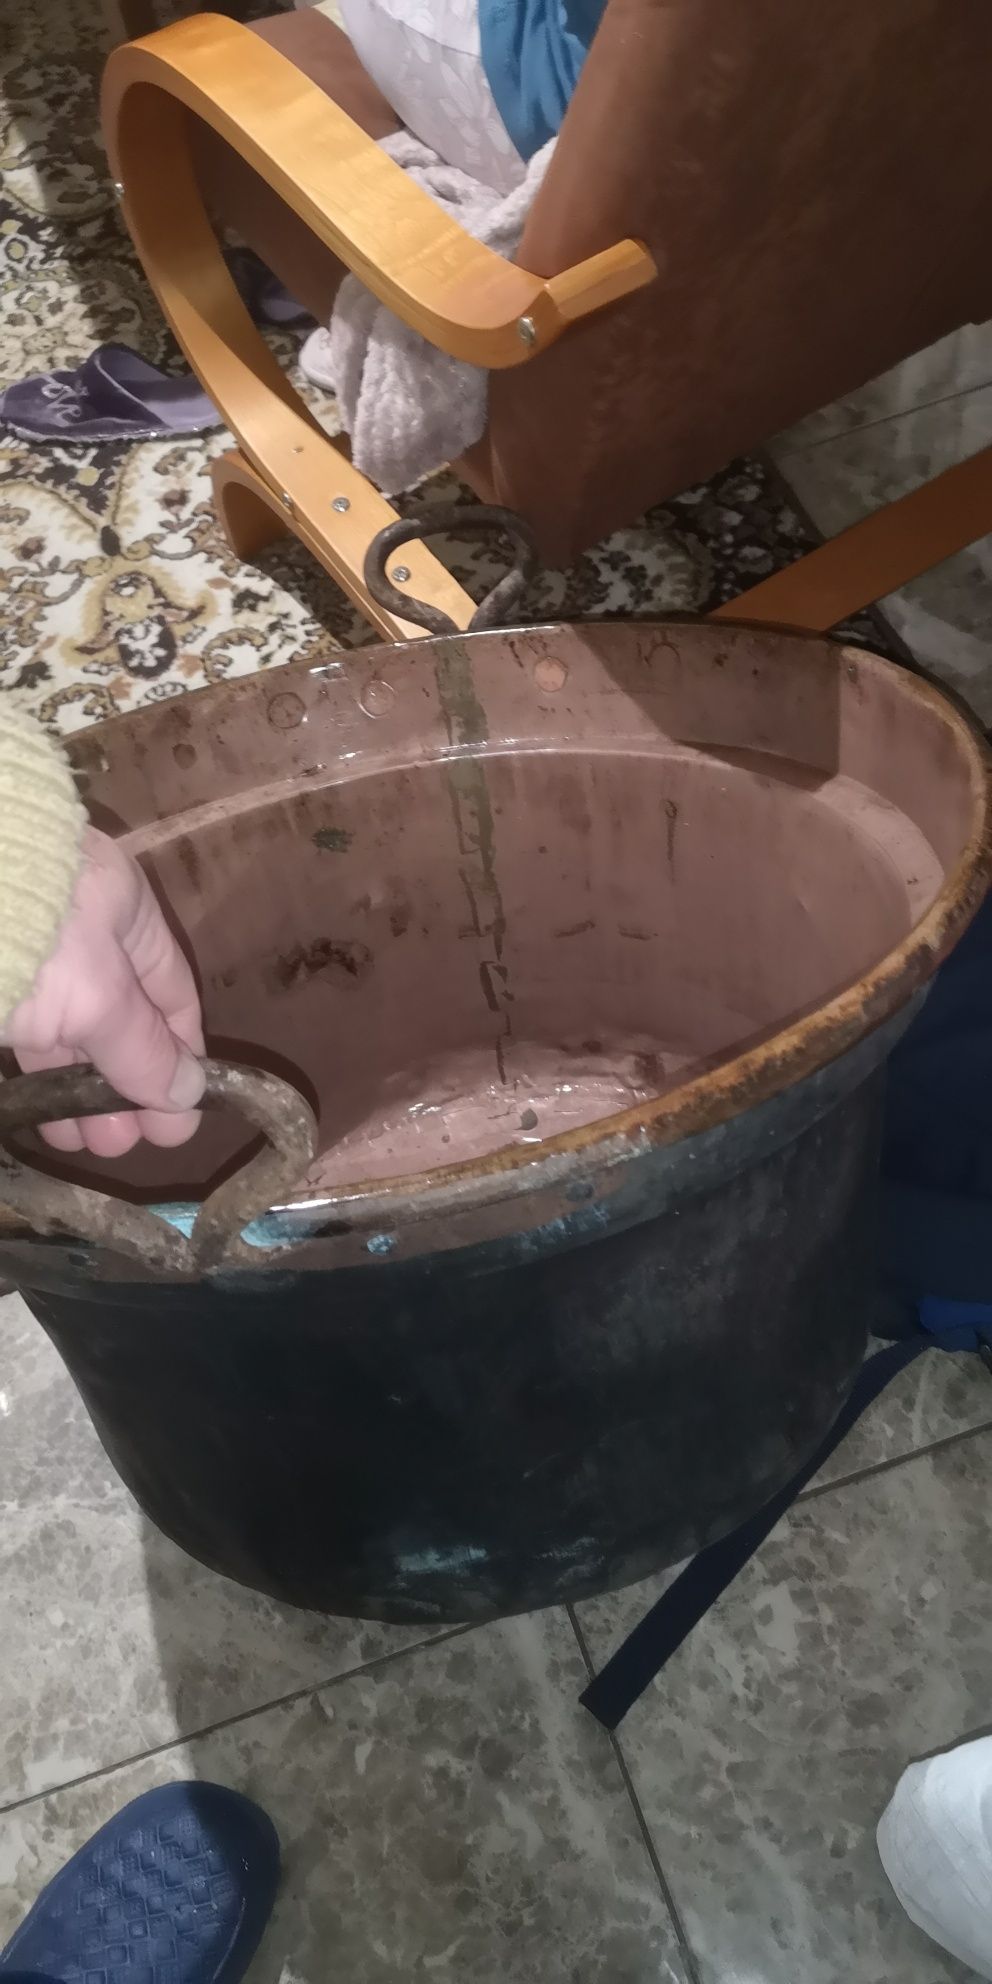 Ceaun cupru vechi batut 45,80 litri